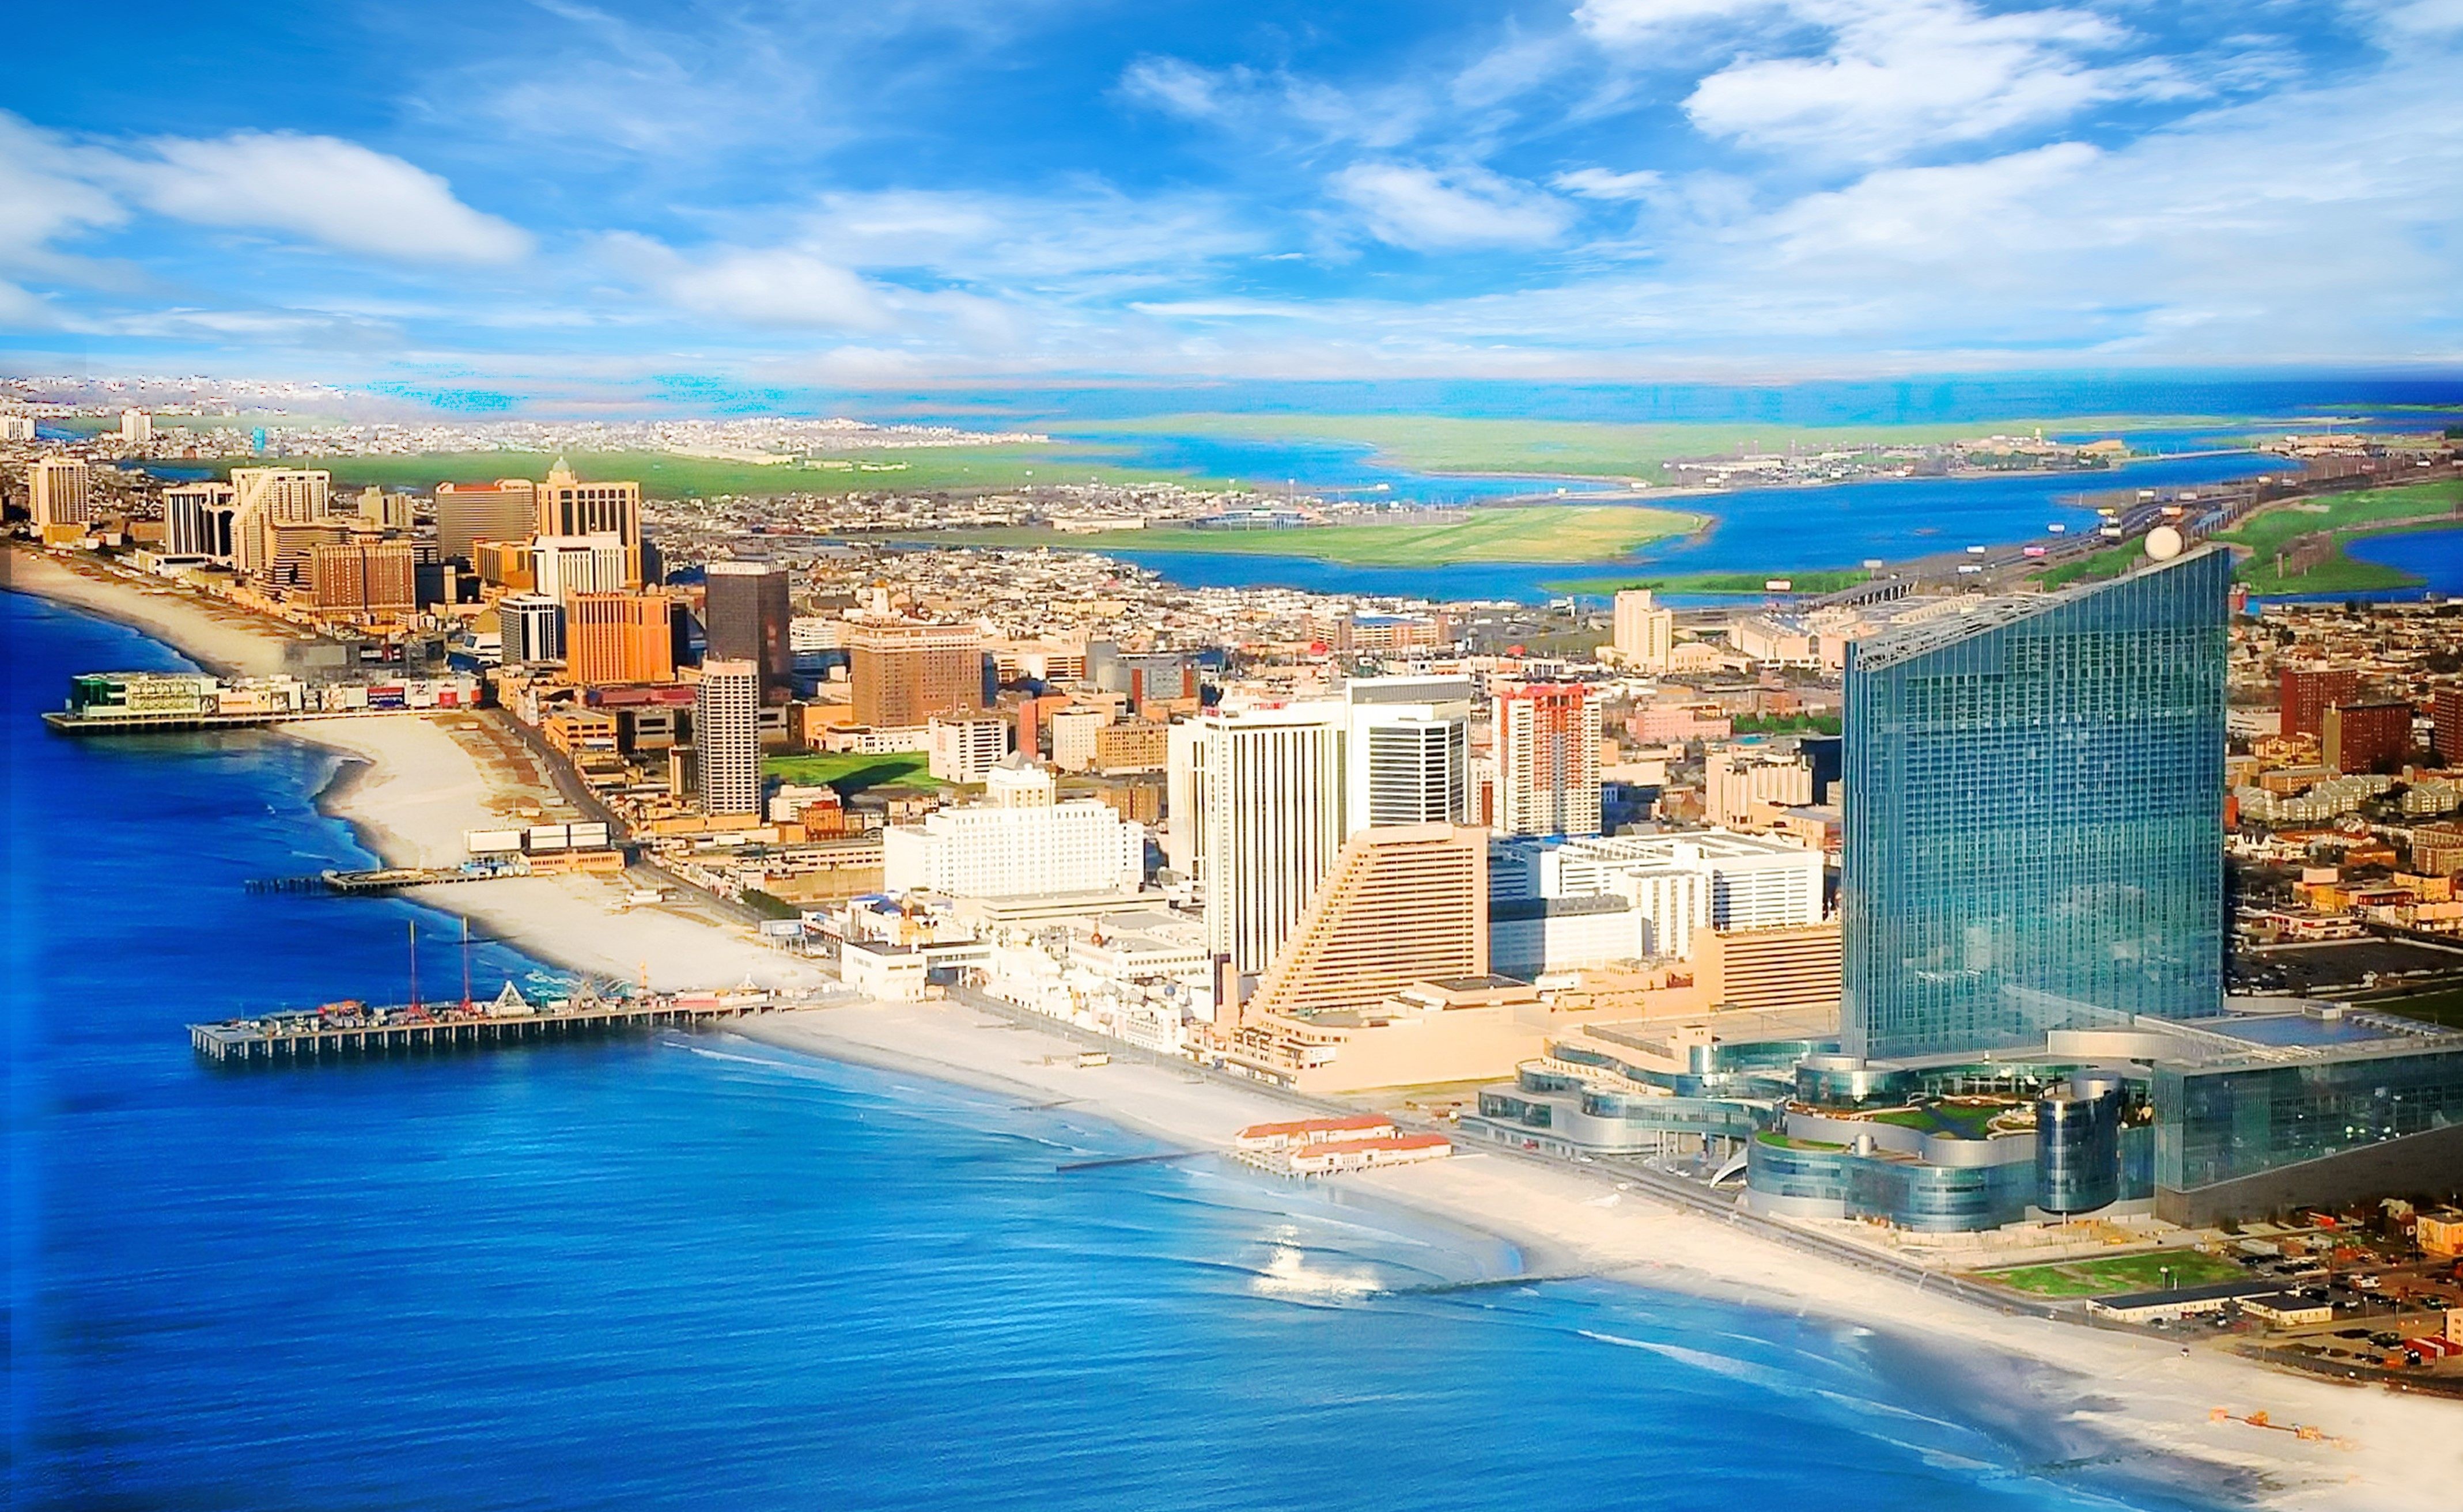 Atlantic City Tourism Report Provides Plenty of Optimism